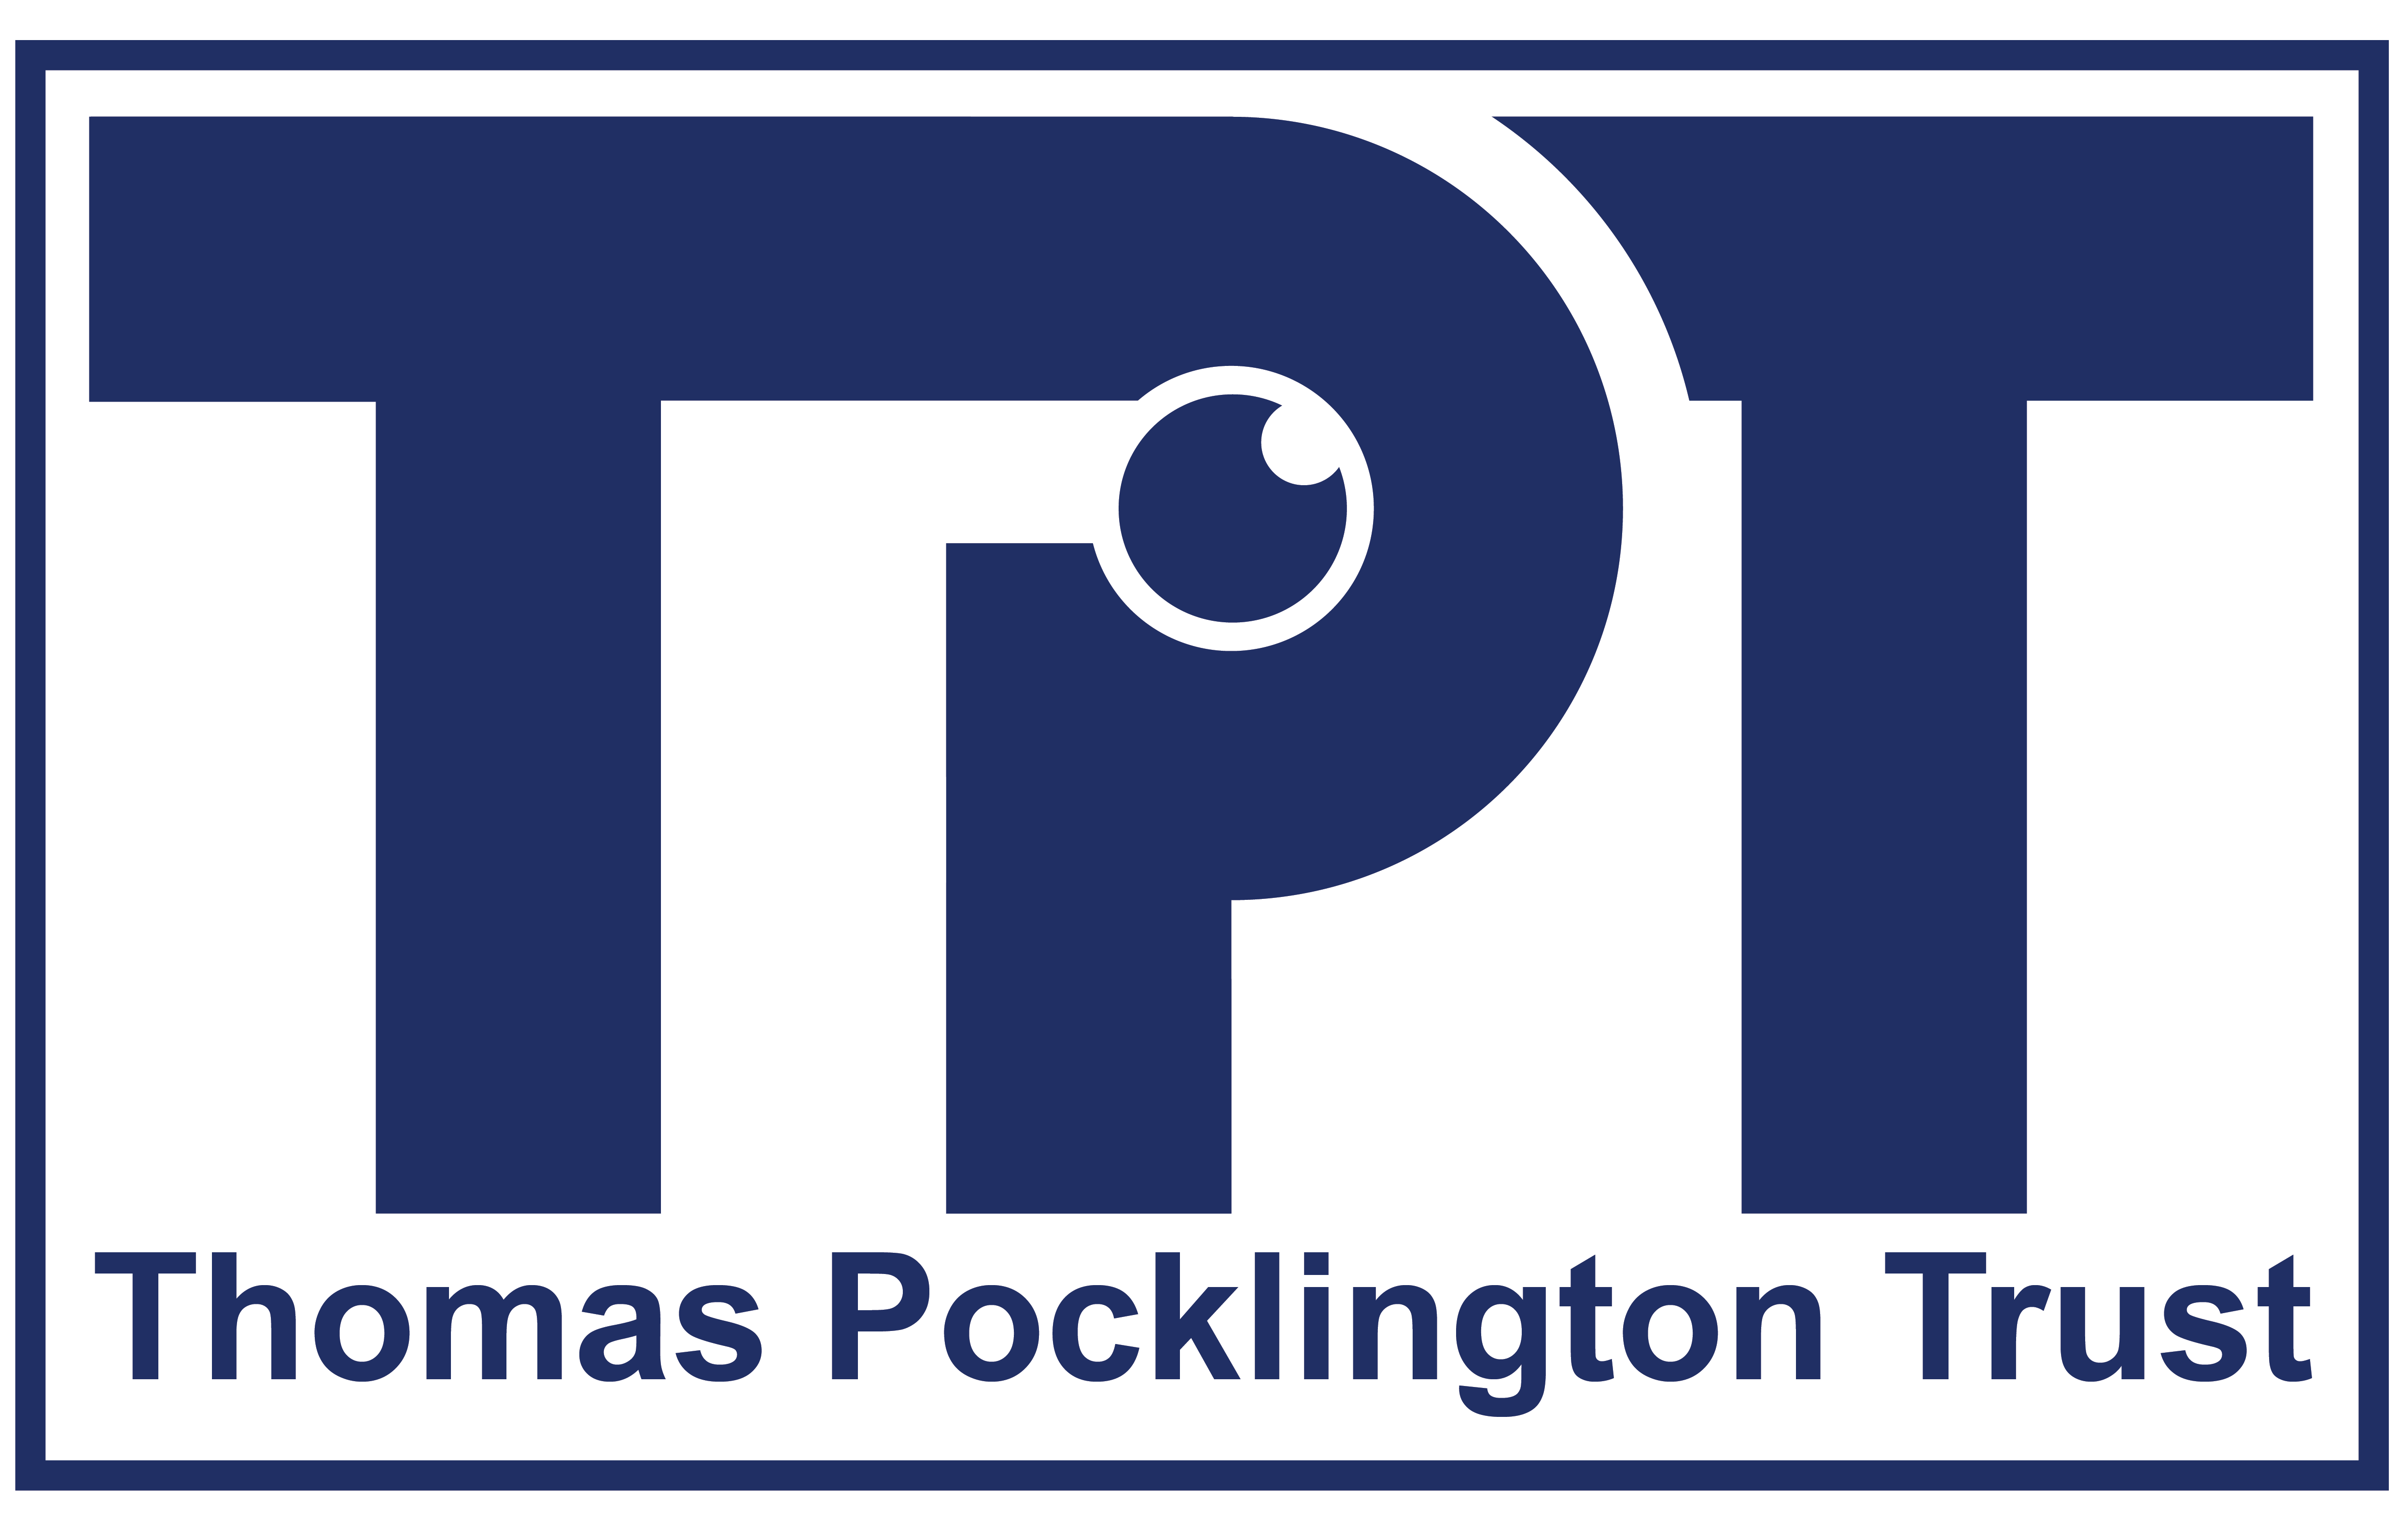 Thomas Pocklington Trust.png